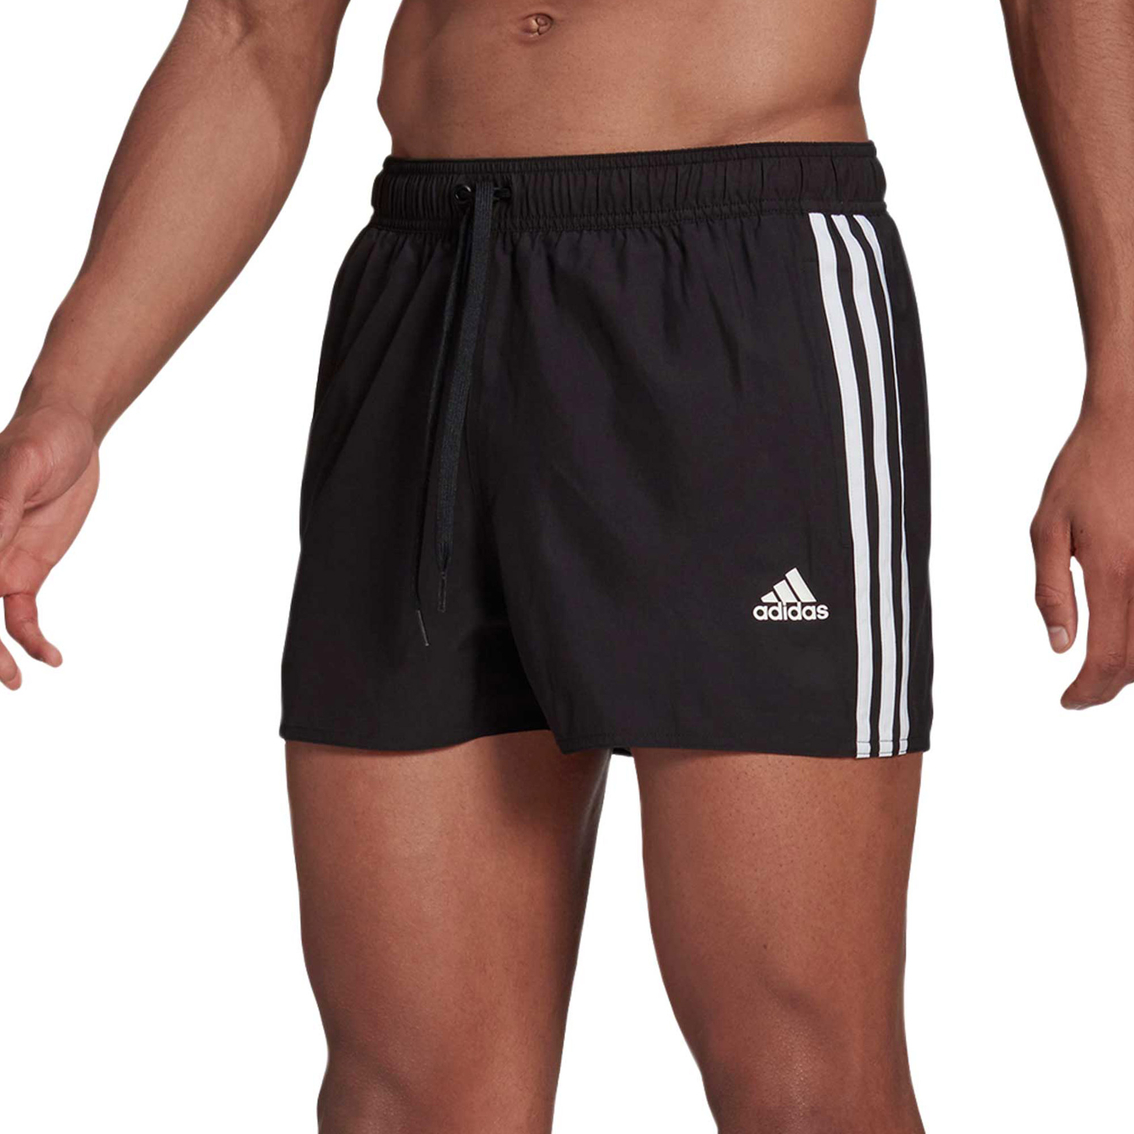 Adidas Classic 3-stripes Swim Shorts | Swimwear | Clothing ...